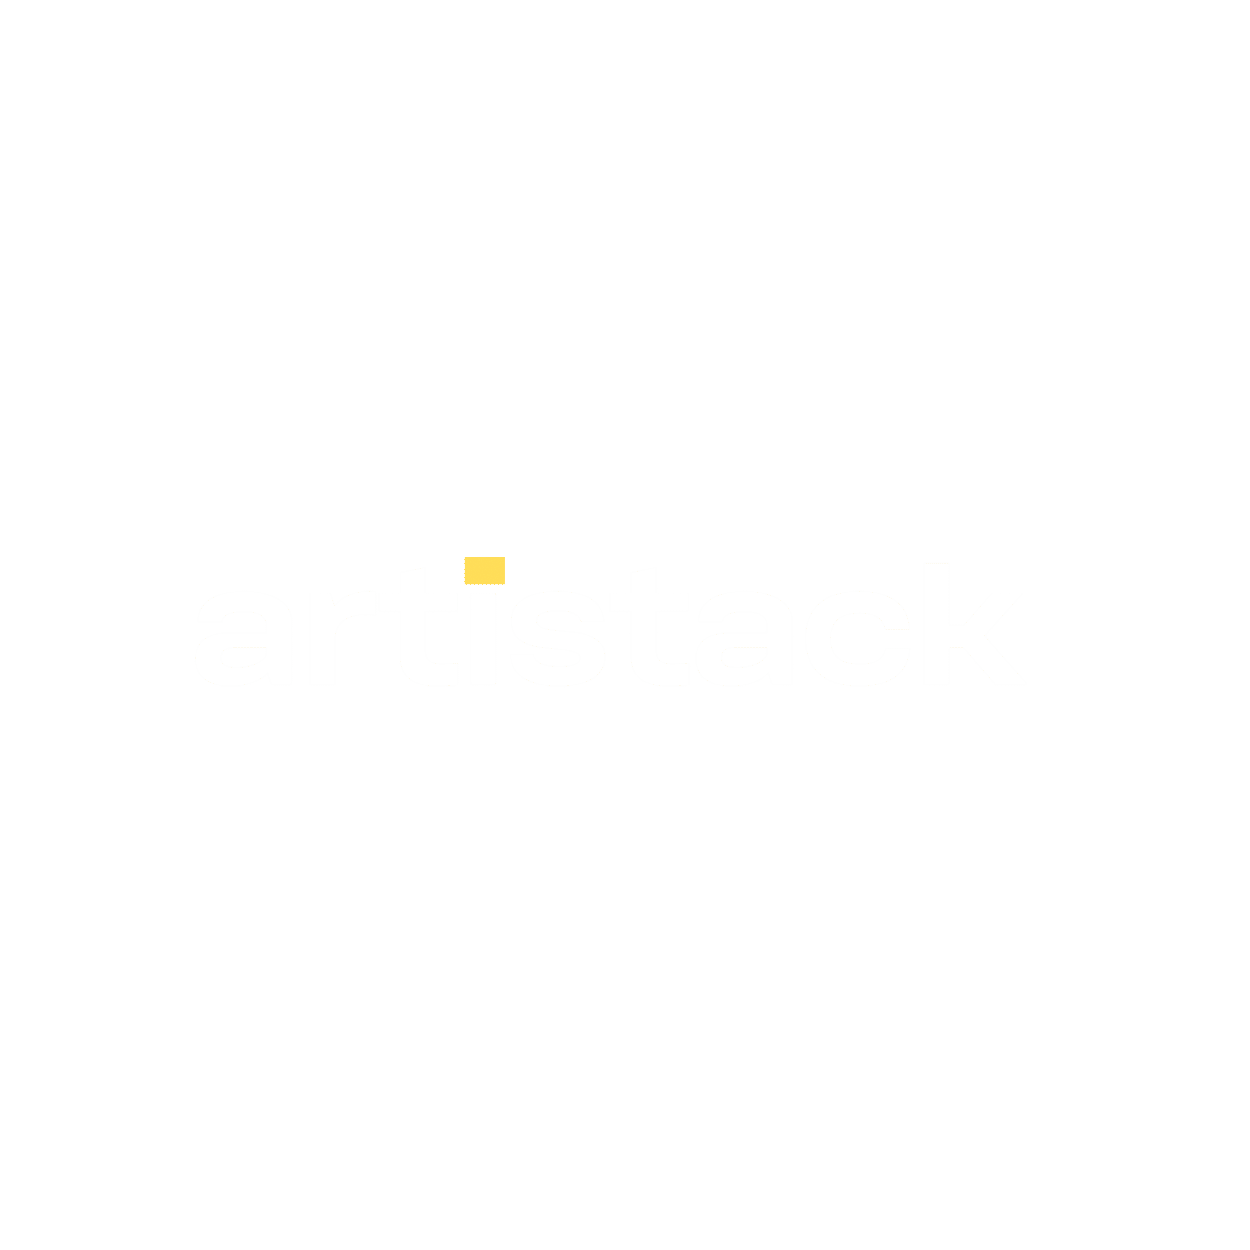 Artistack